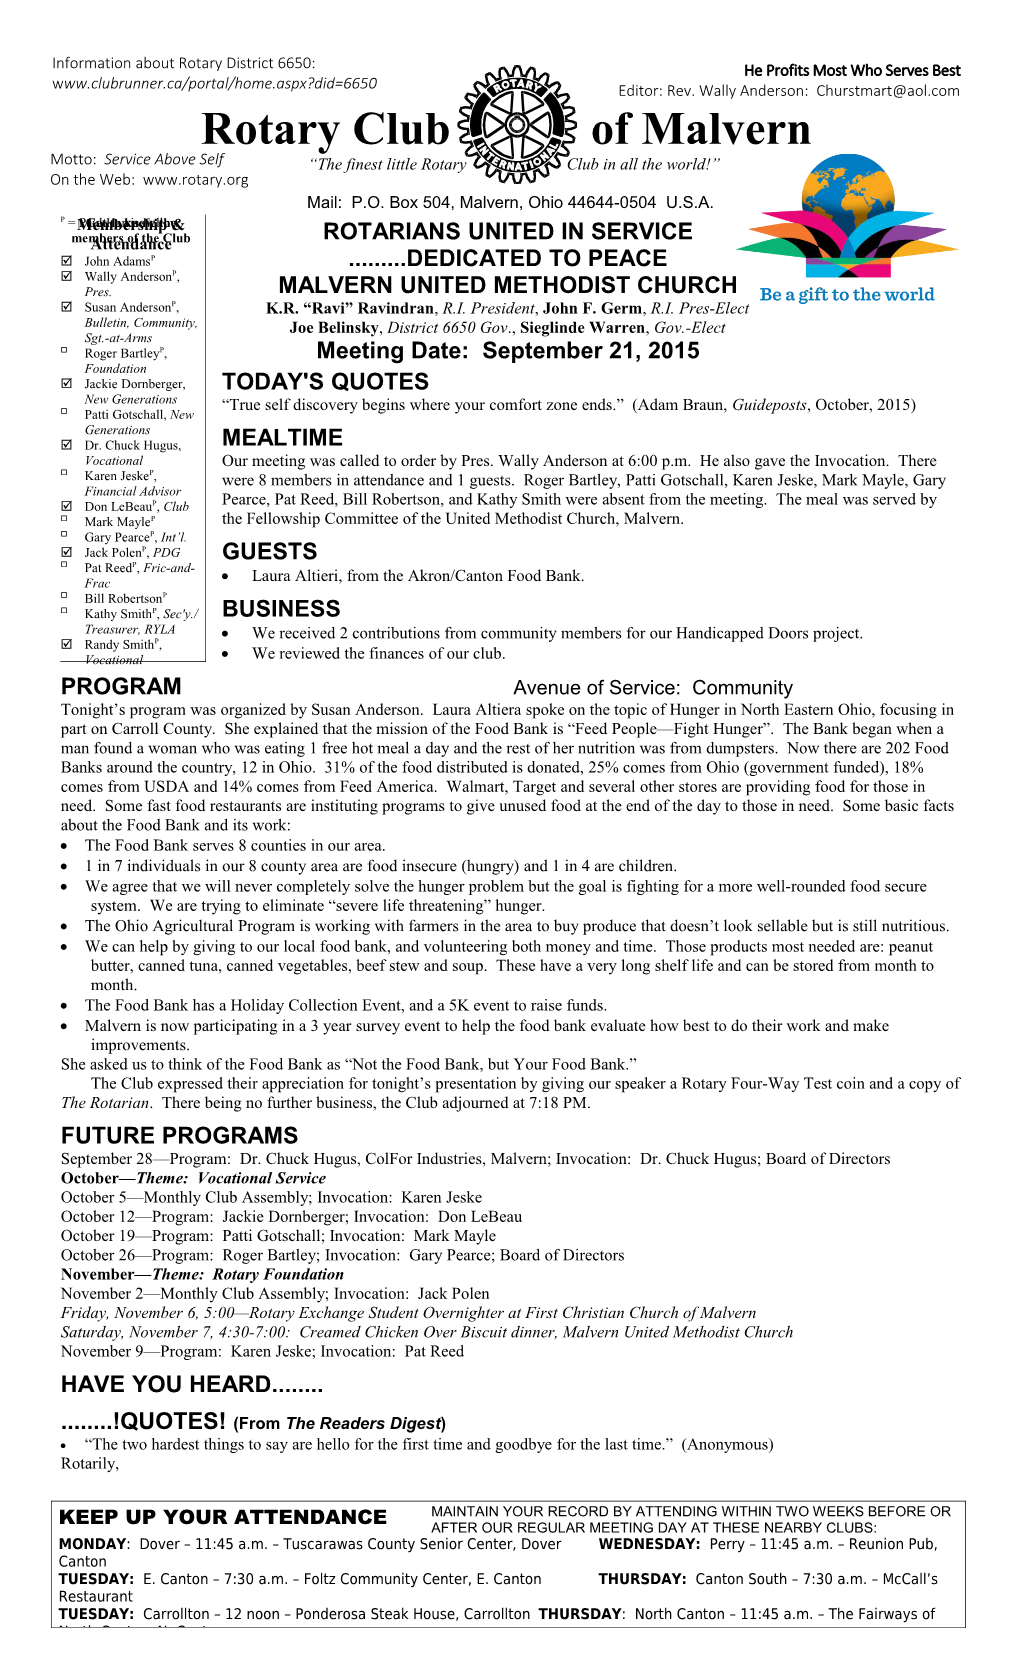 Rotary Bulletin Form, 1997